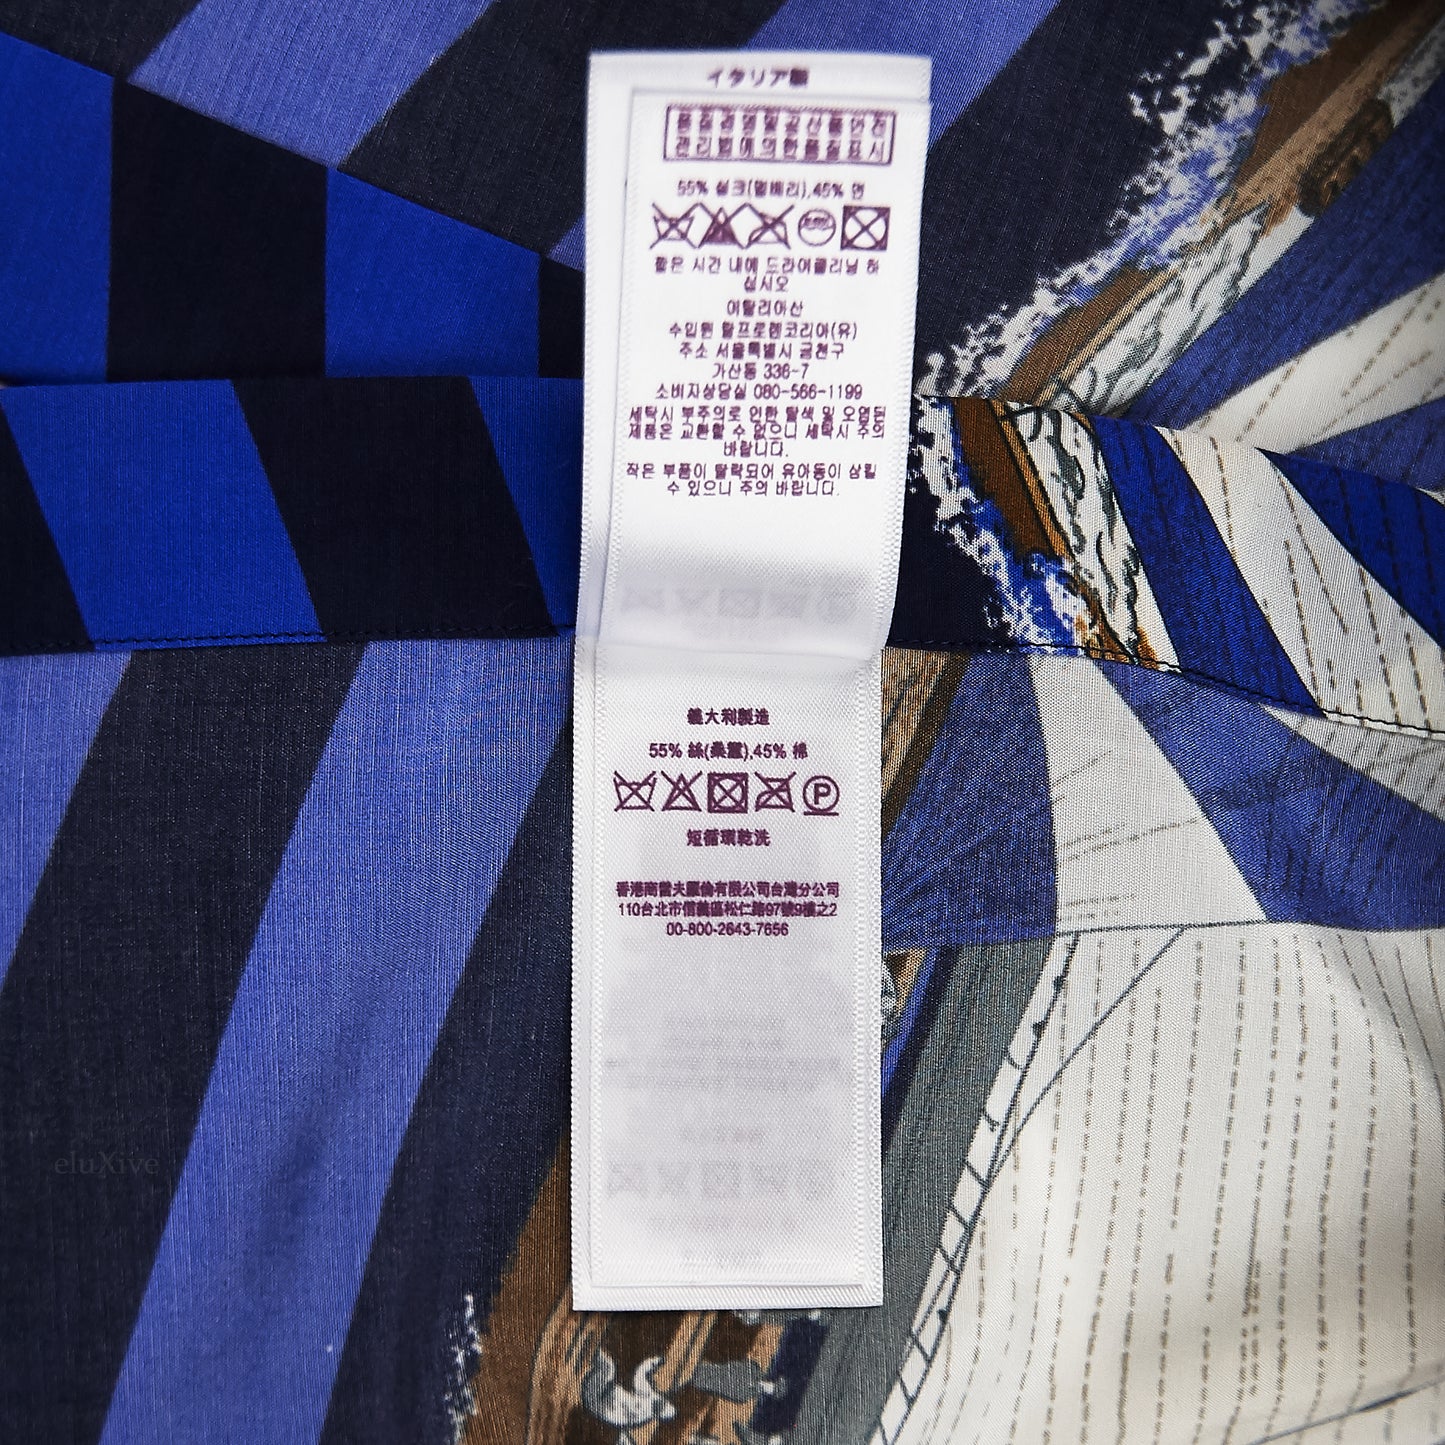 Ralph Lauren Purple Label - Silk Sailing Print Button Down Shirt